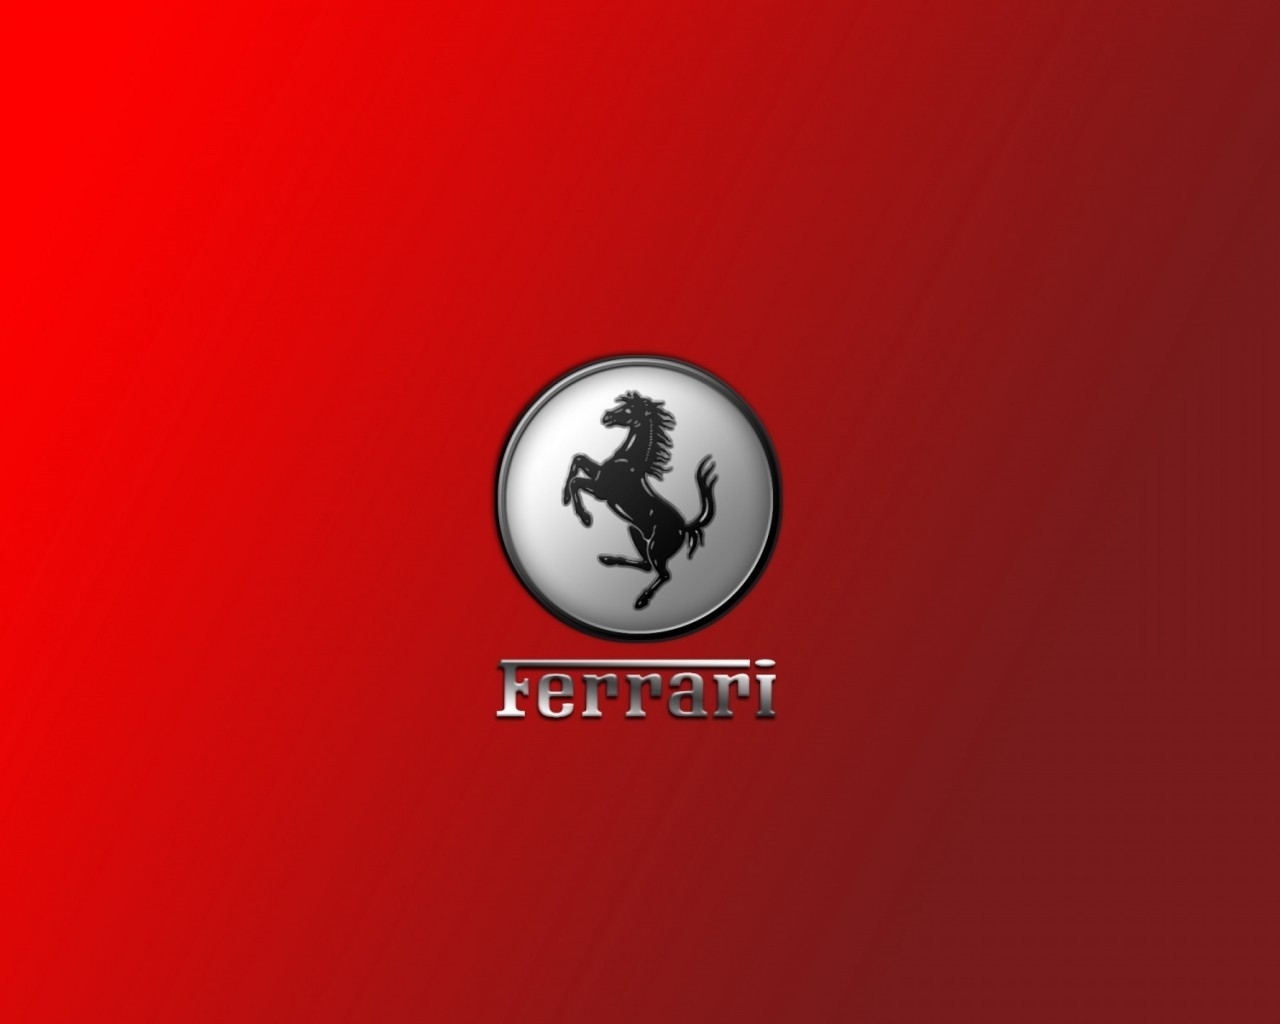 Gorgeous Ferrari Logo for 1280 x 1024 resolution